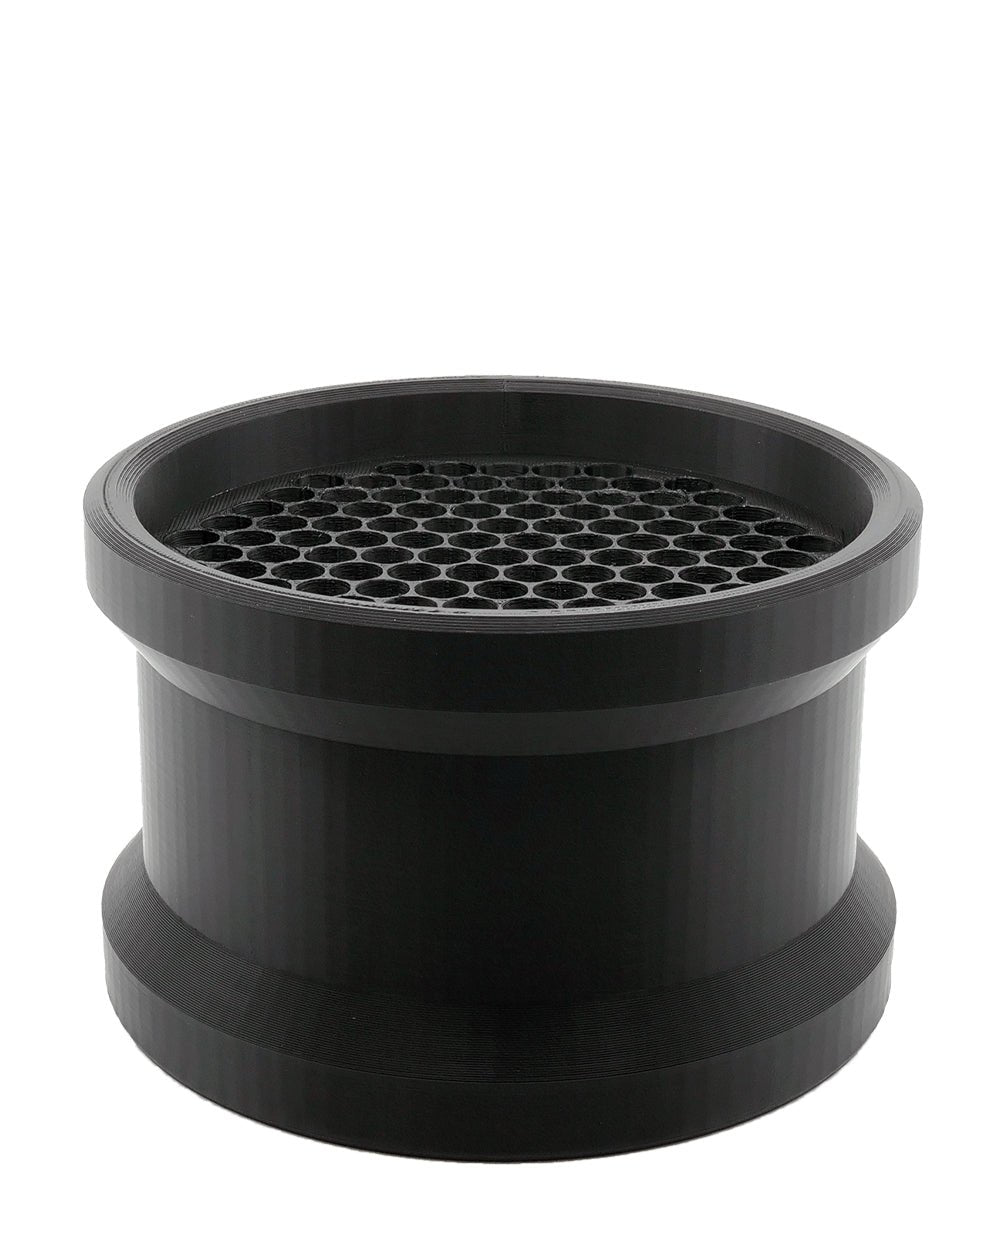 HUMBOLDT | Black Pre-Rolled Cones Filling Machine Starter Kit 98mm | Fill 121 Cones Per Run - 3